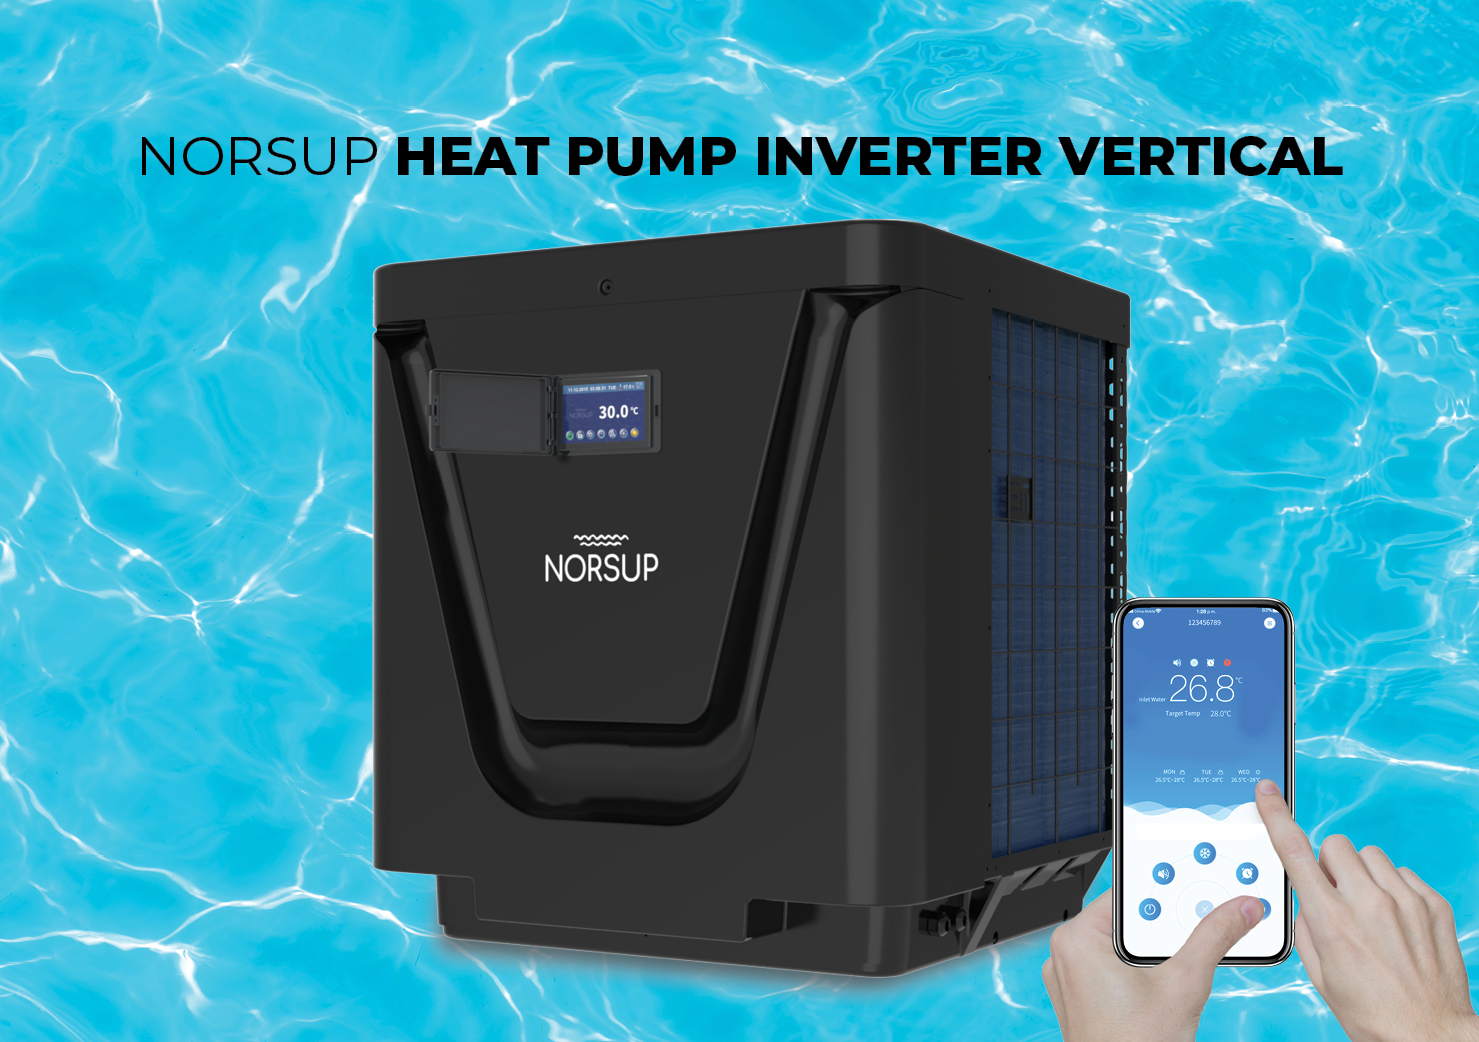 Norsup inverter heat pump vertical